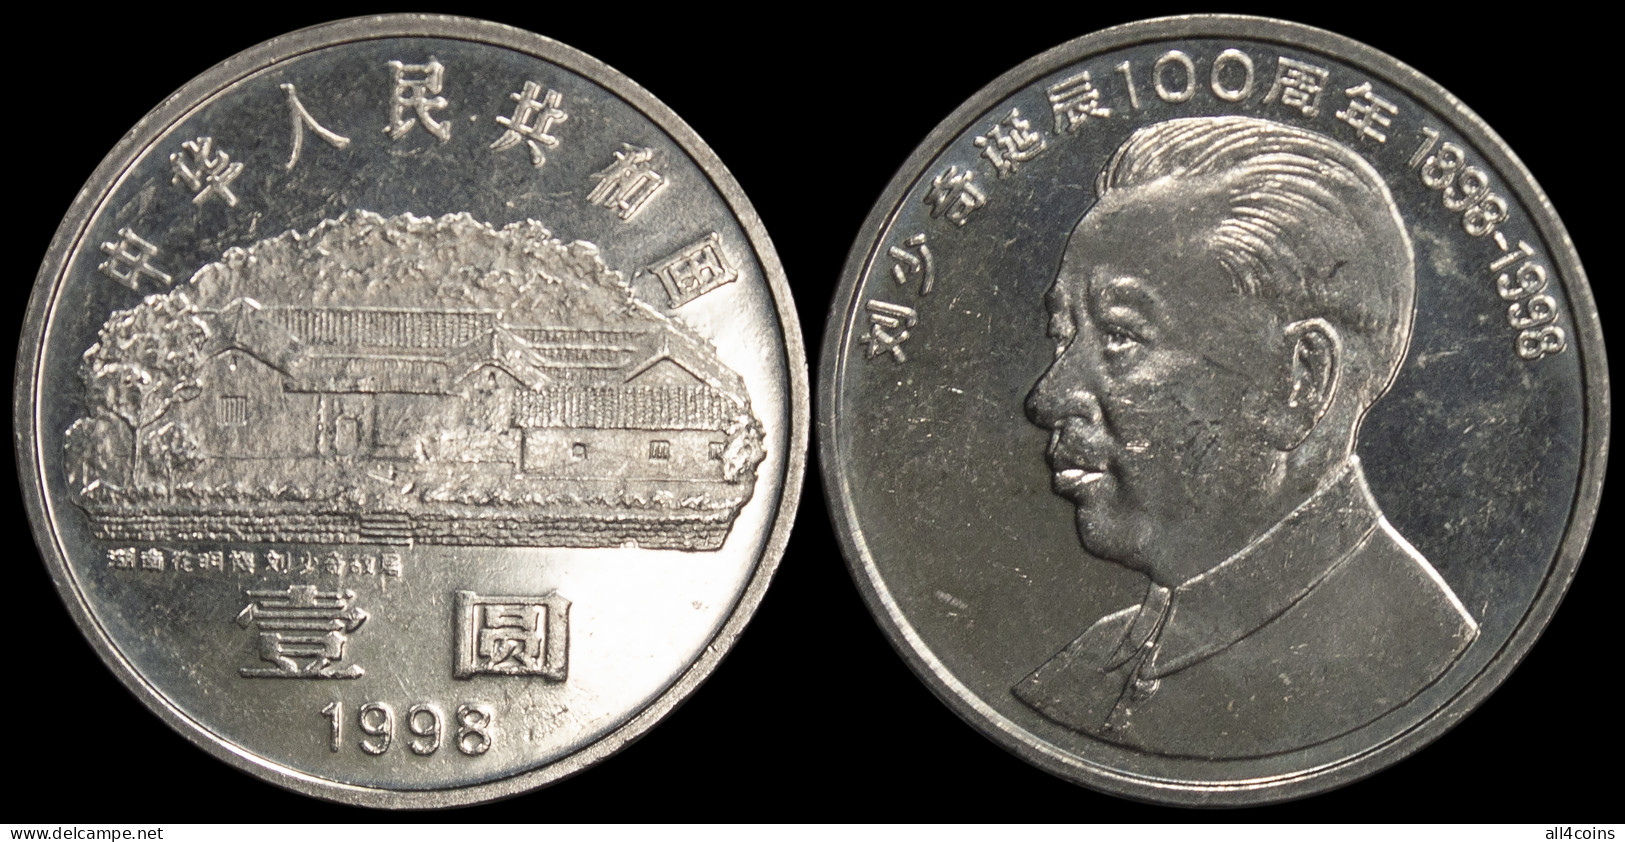 China. 1 Yuan. 1998 (Coin KM#1121. Unc) 100th Anniversary Of Liu Shao-chi - Chine